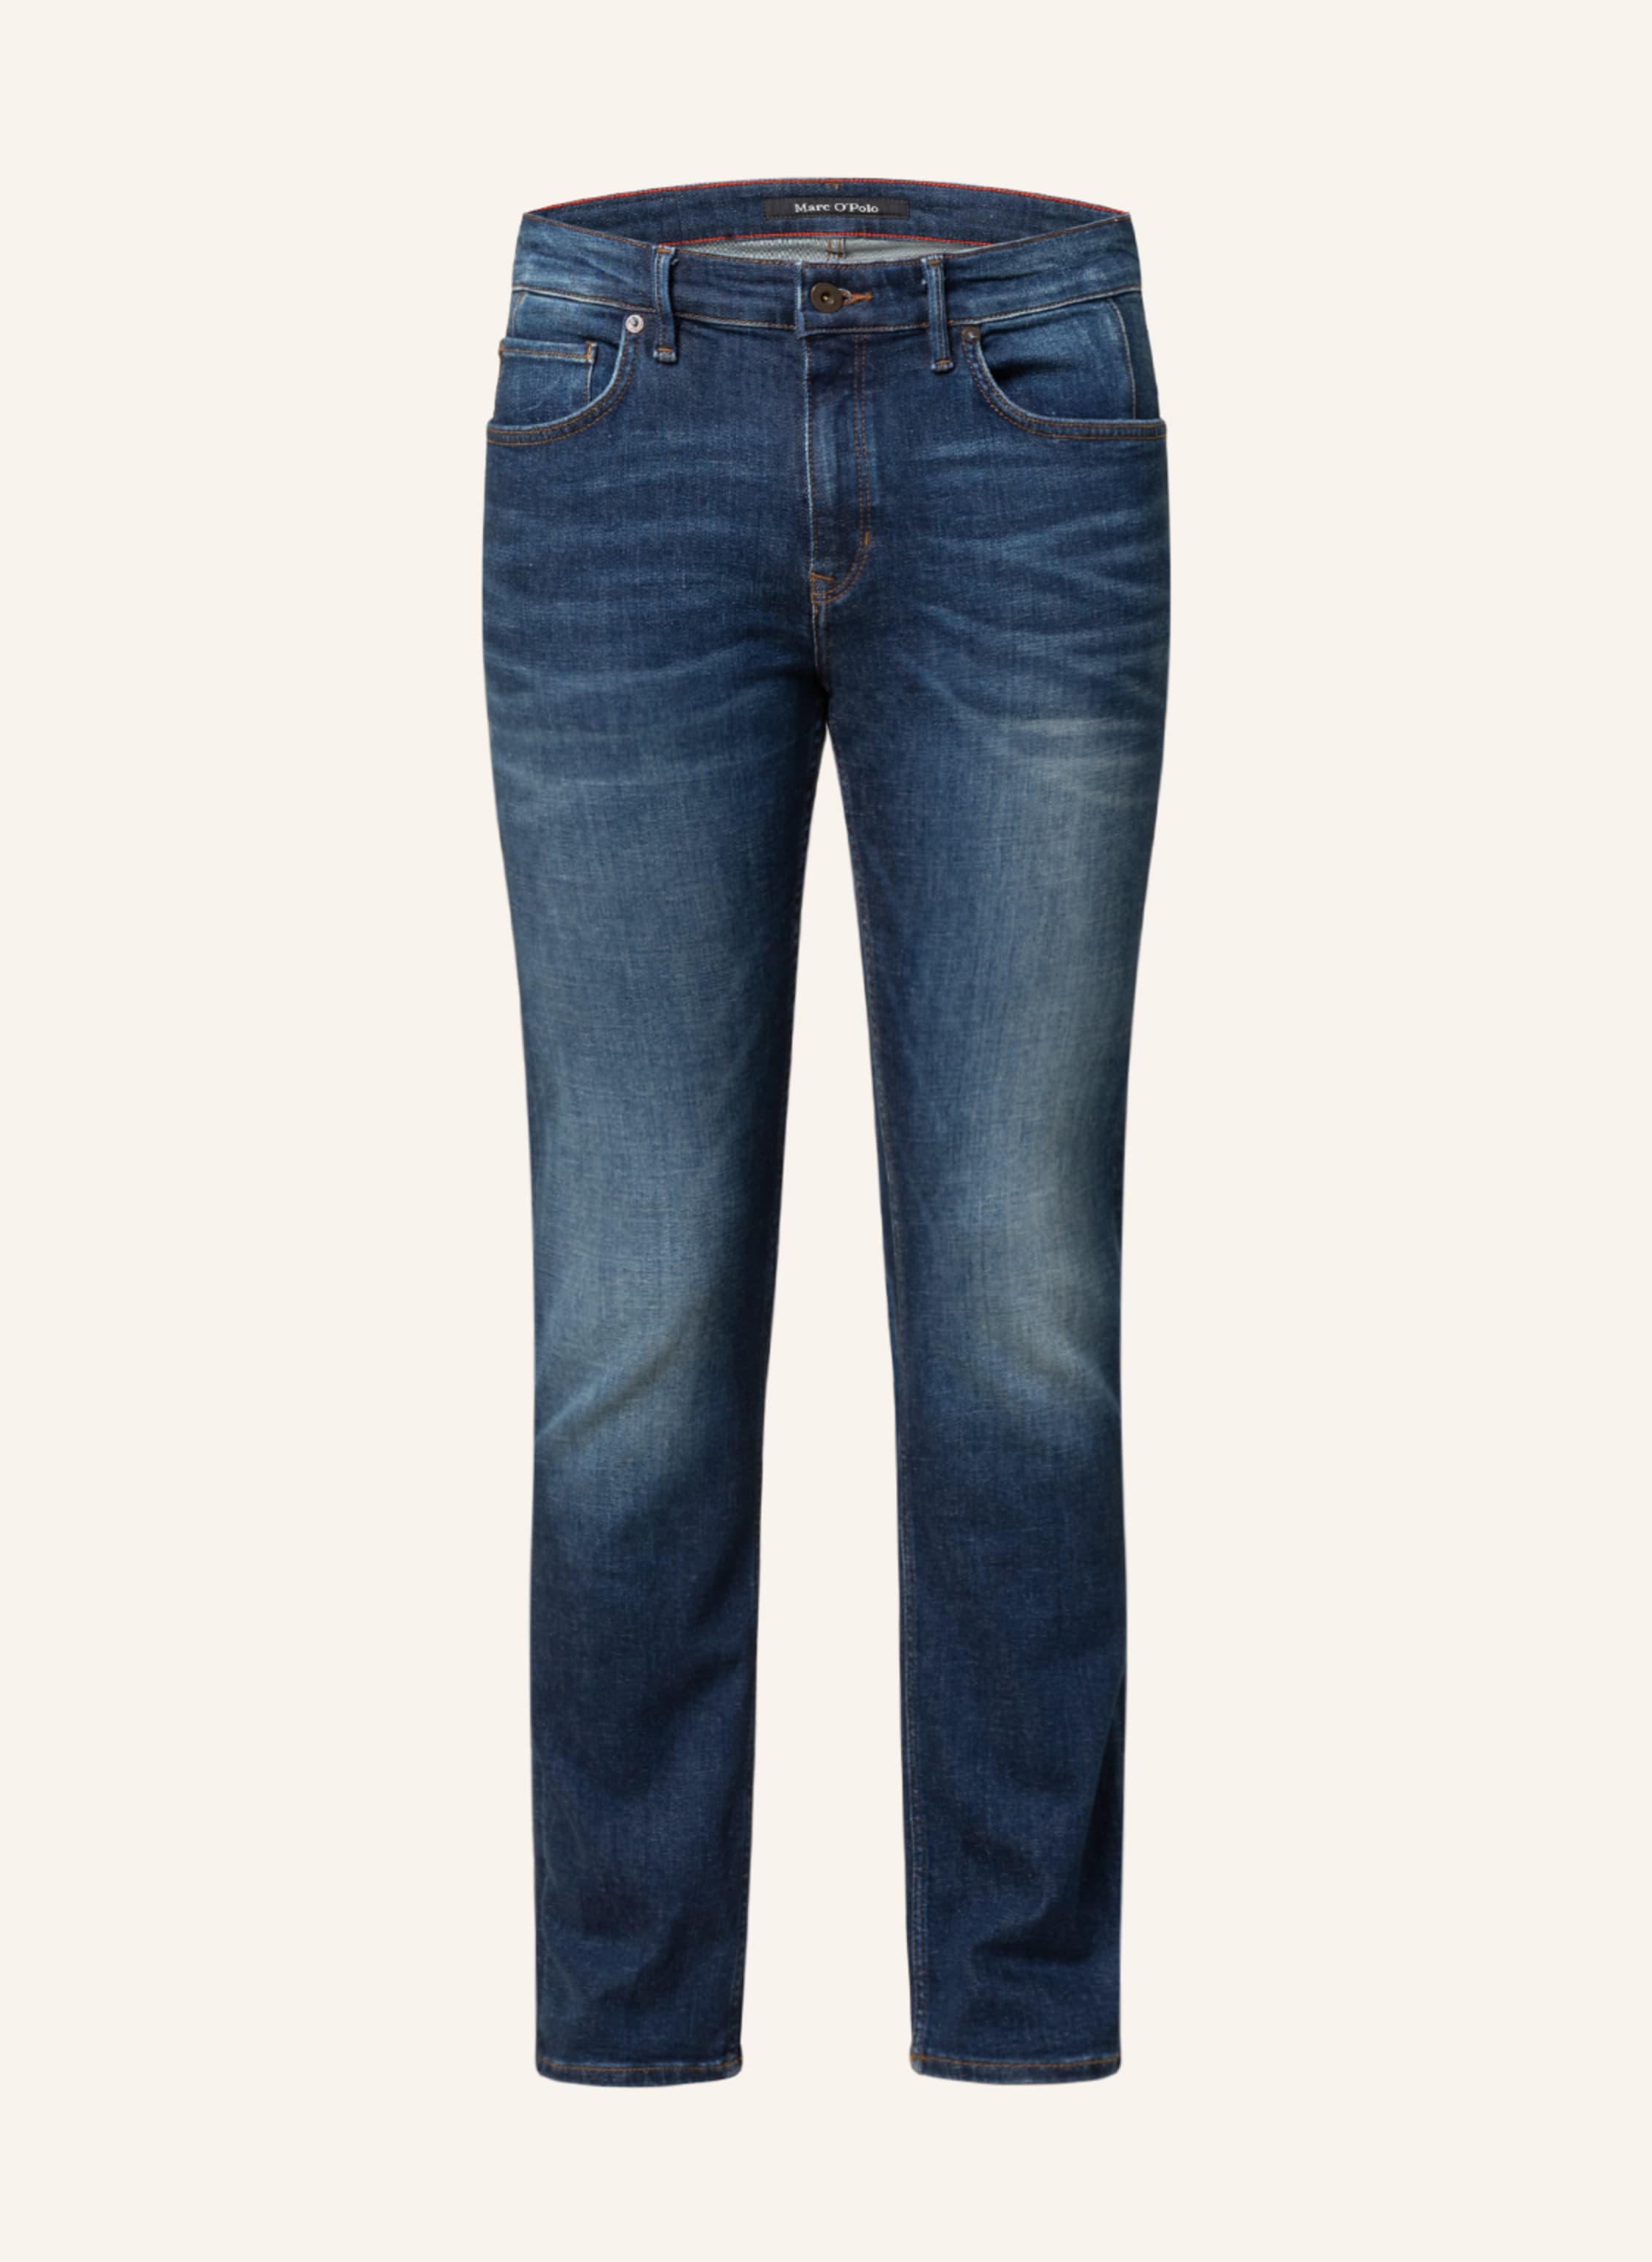 Beyond verkorten Geruststellen Marc O'Polo Jeans SJÖBO slim fit in 052 authentic dark blue | Breuninger